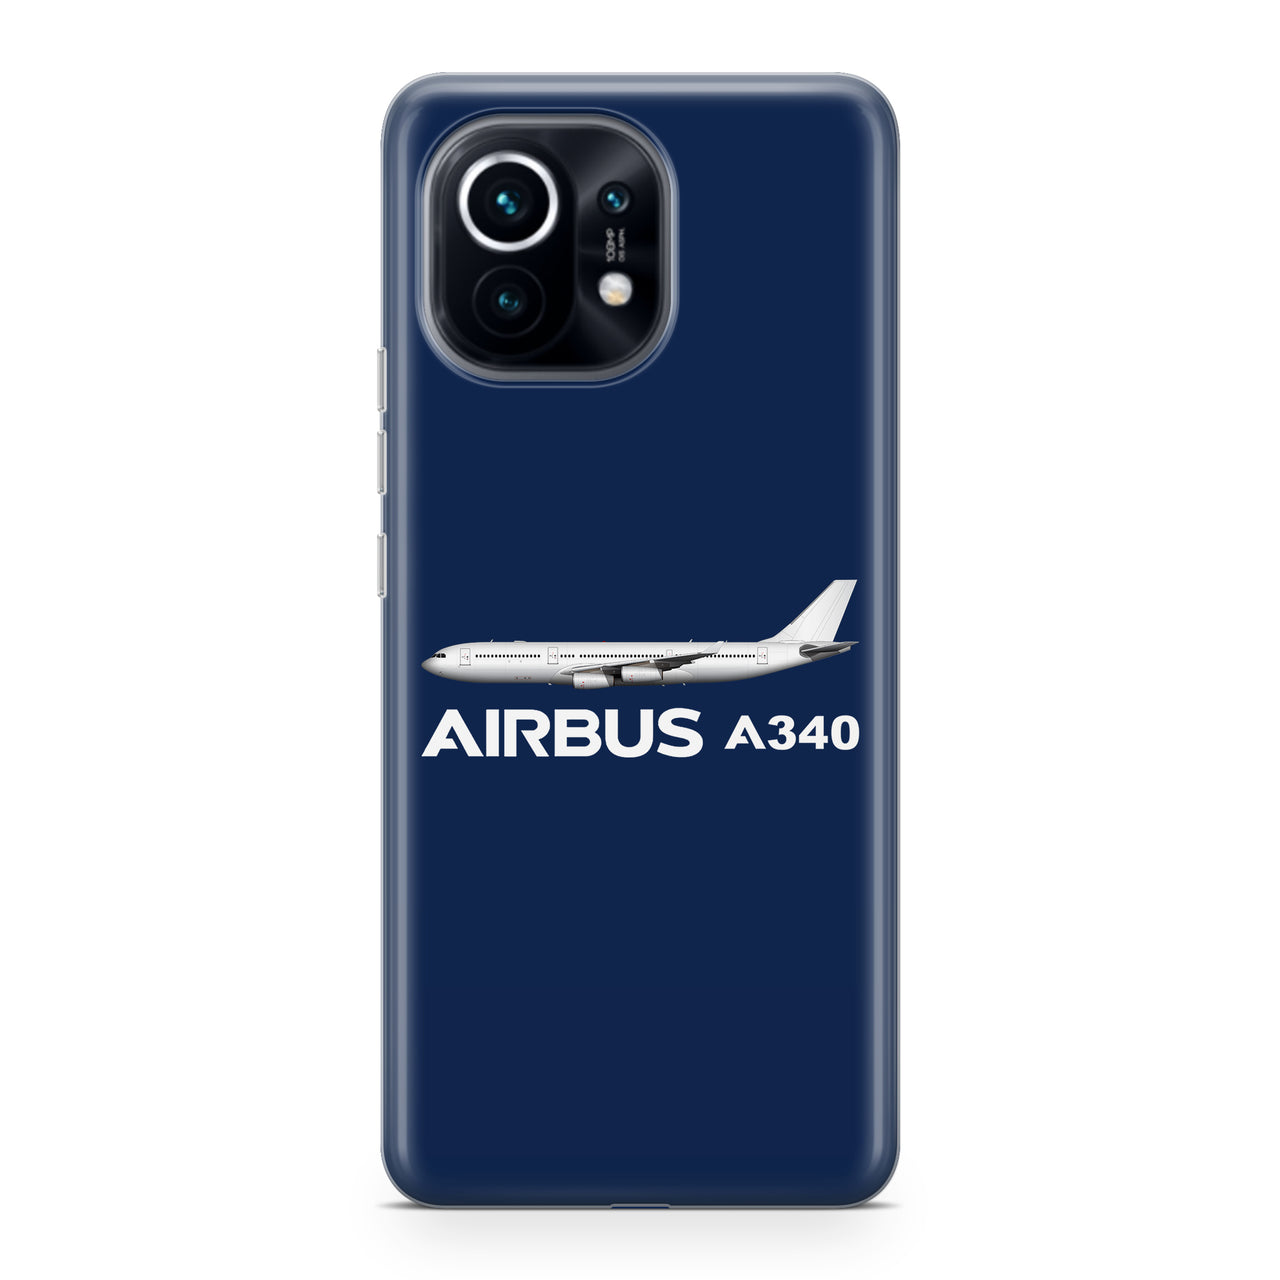 The Airbus A340 Designed Xiaomi Cases